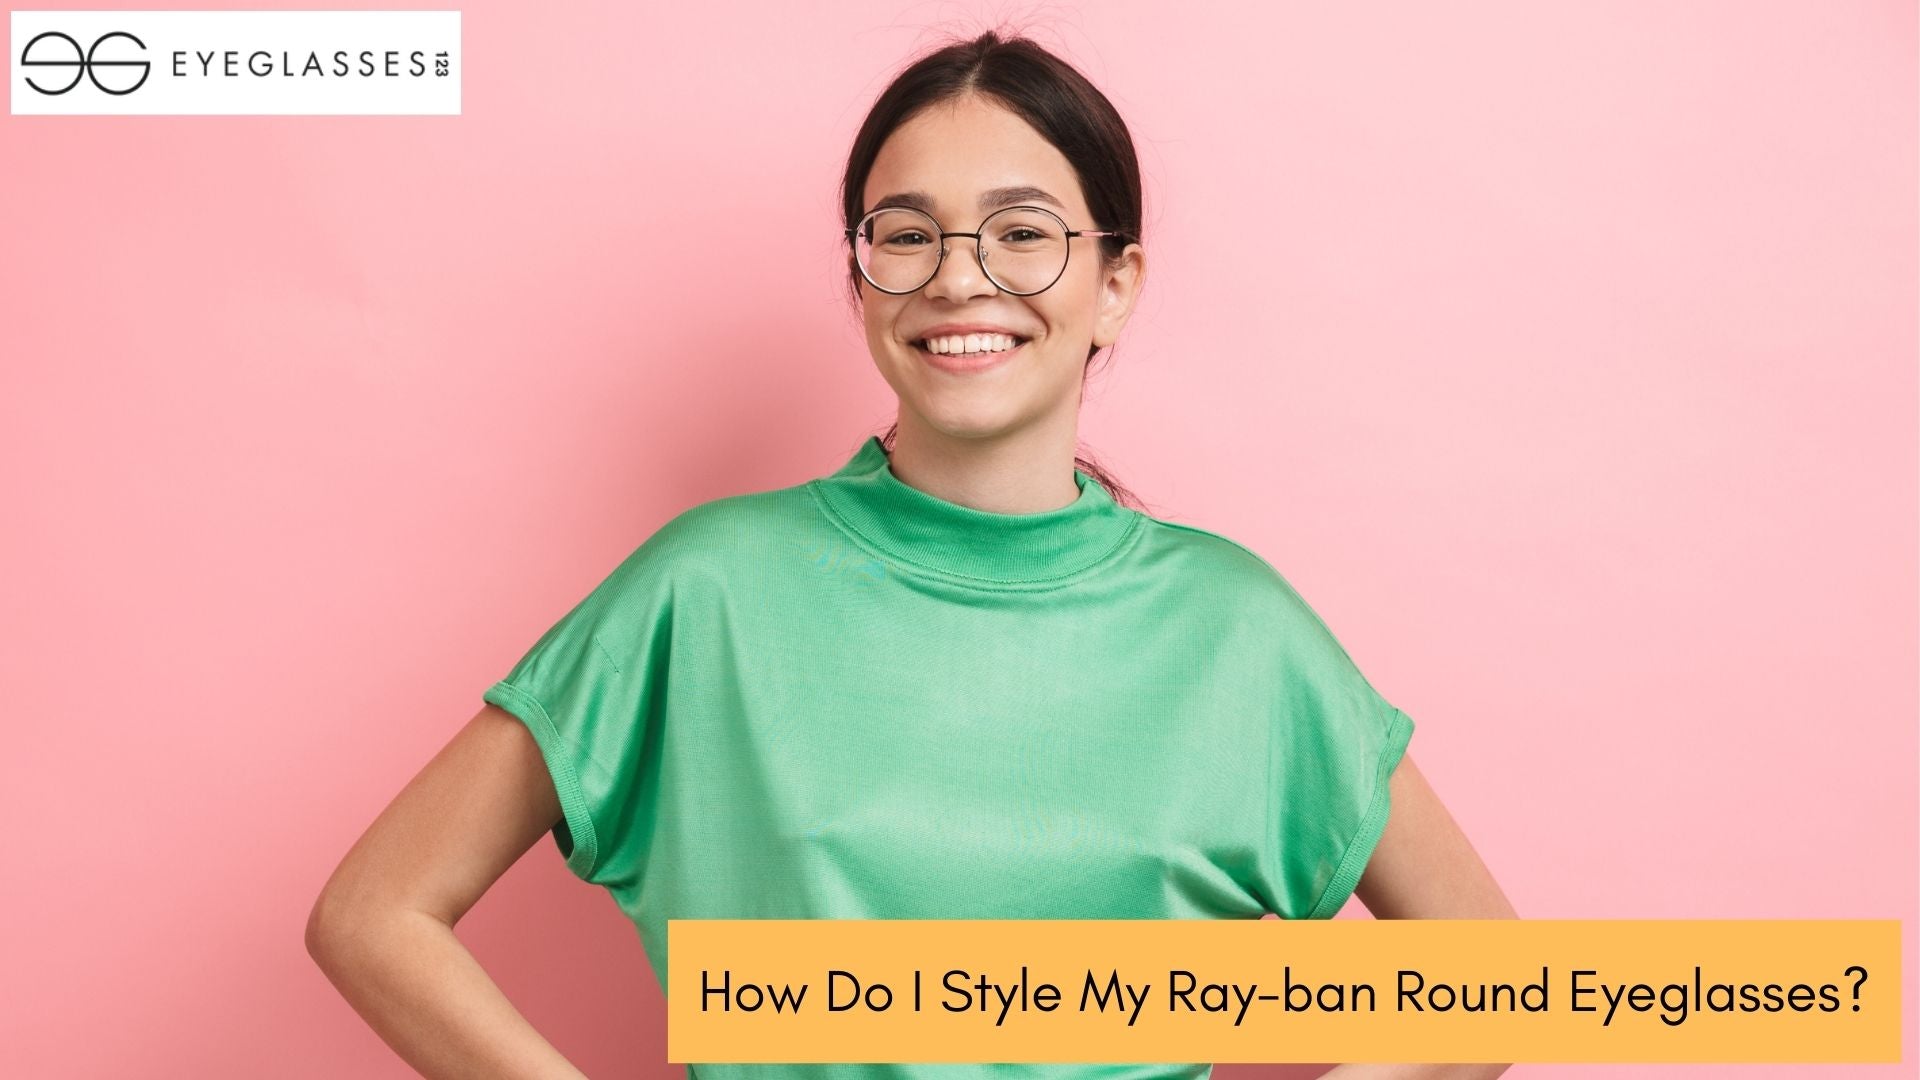 How Do I Style My Ray-ban Round Eyeglasses?